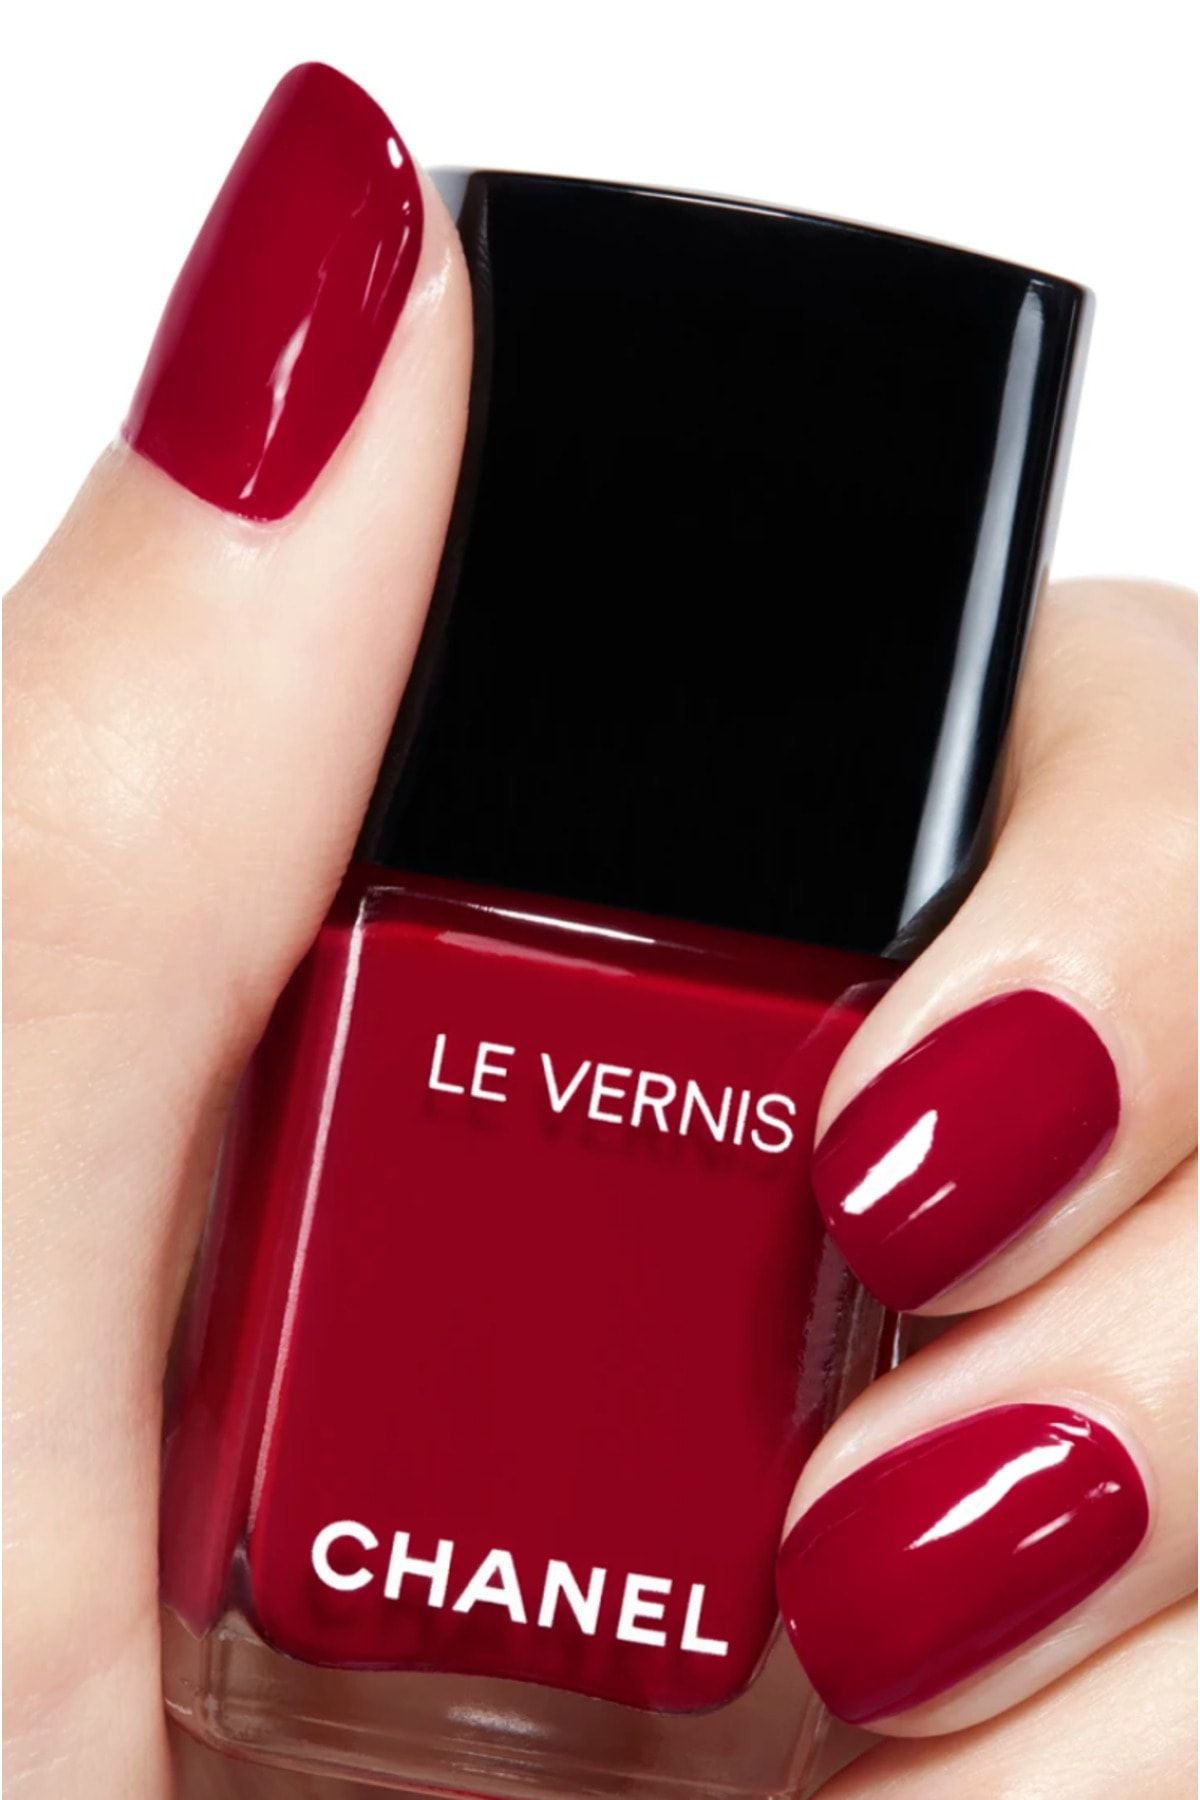 Chanel لاک ناخن LE VERNIS رنگ های زنده و درخشش بالا رنگ قرمز کلاسیک 13 میل